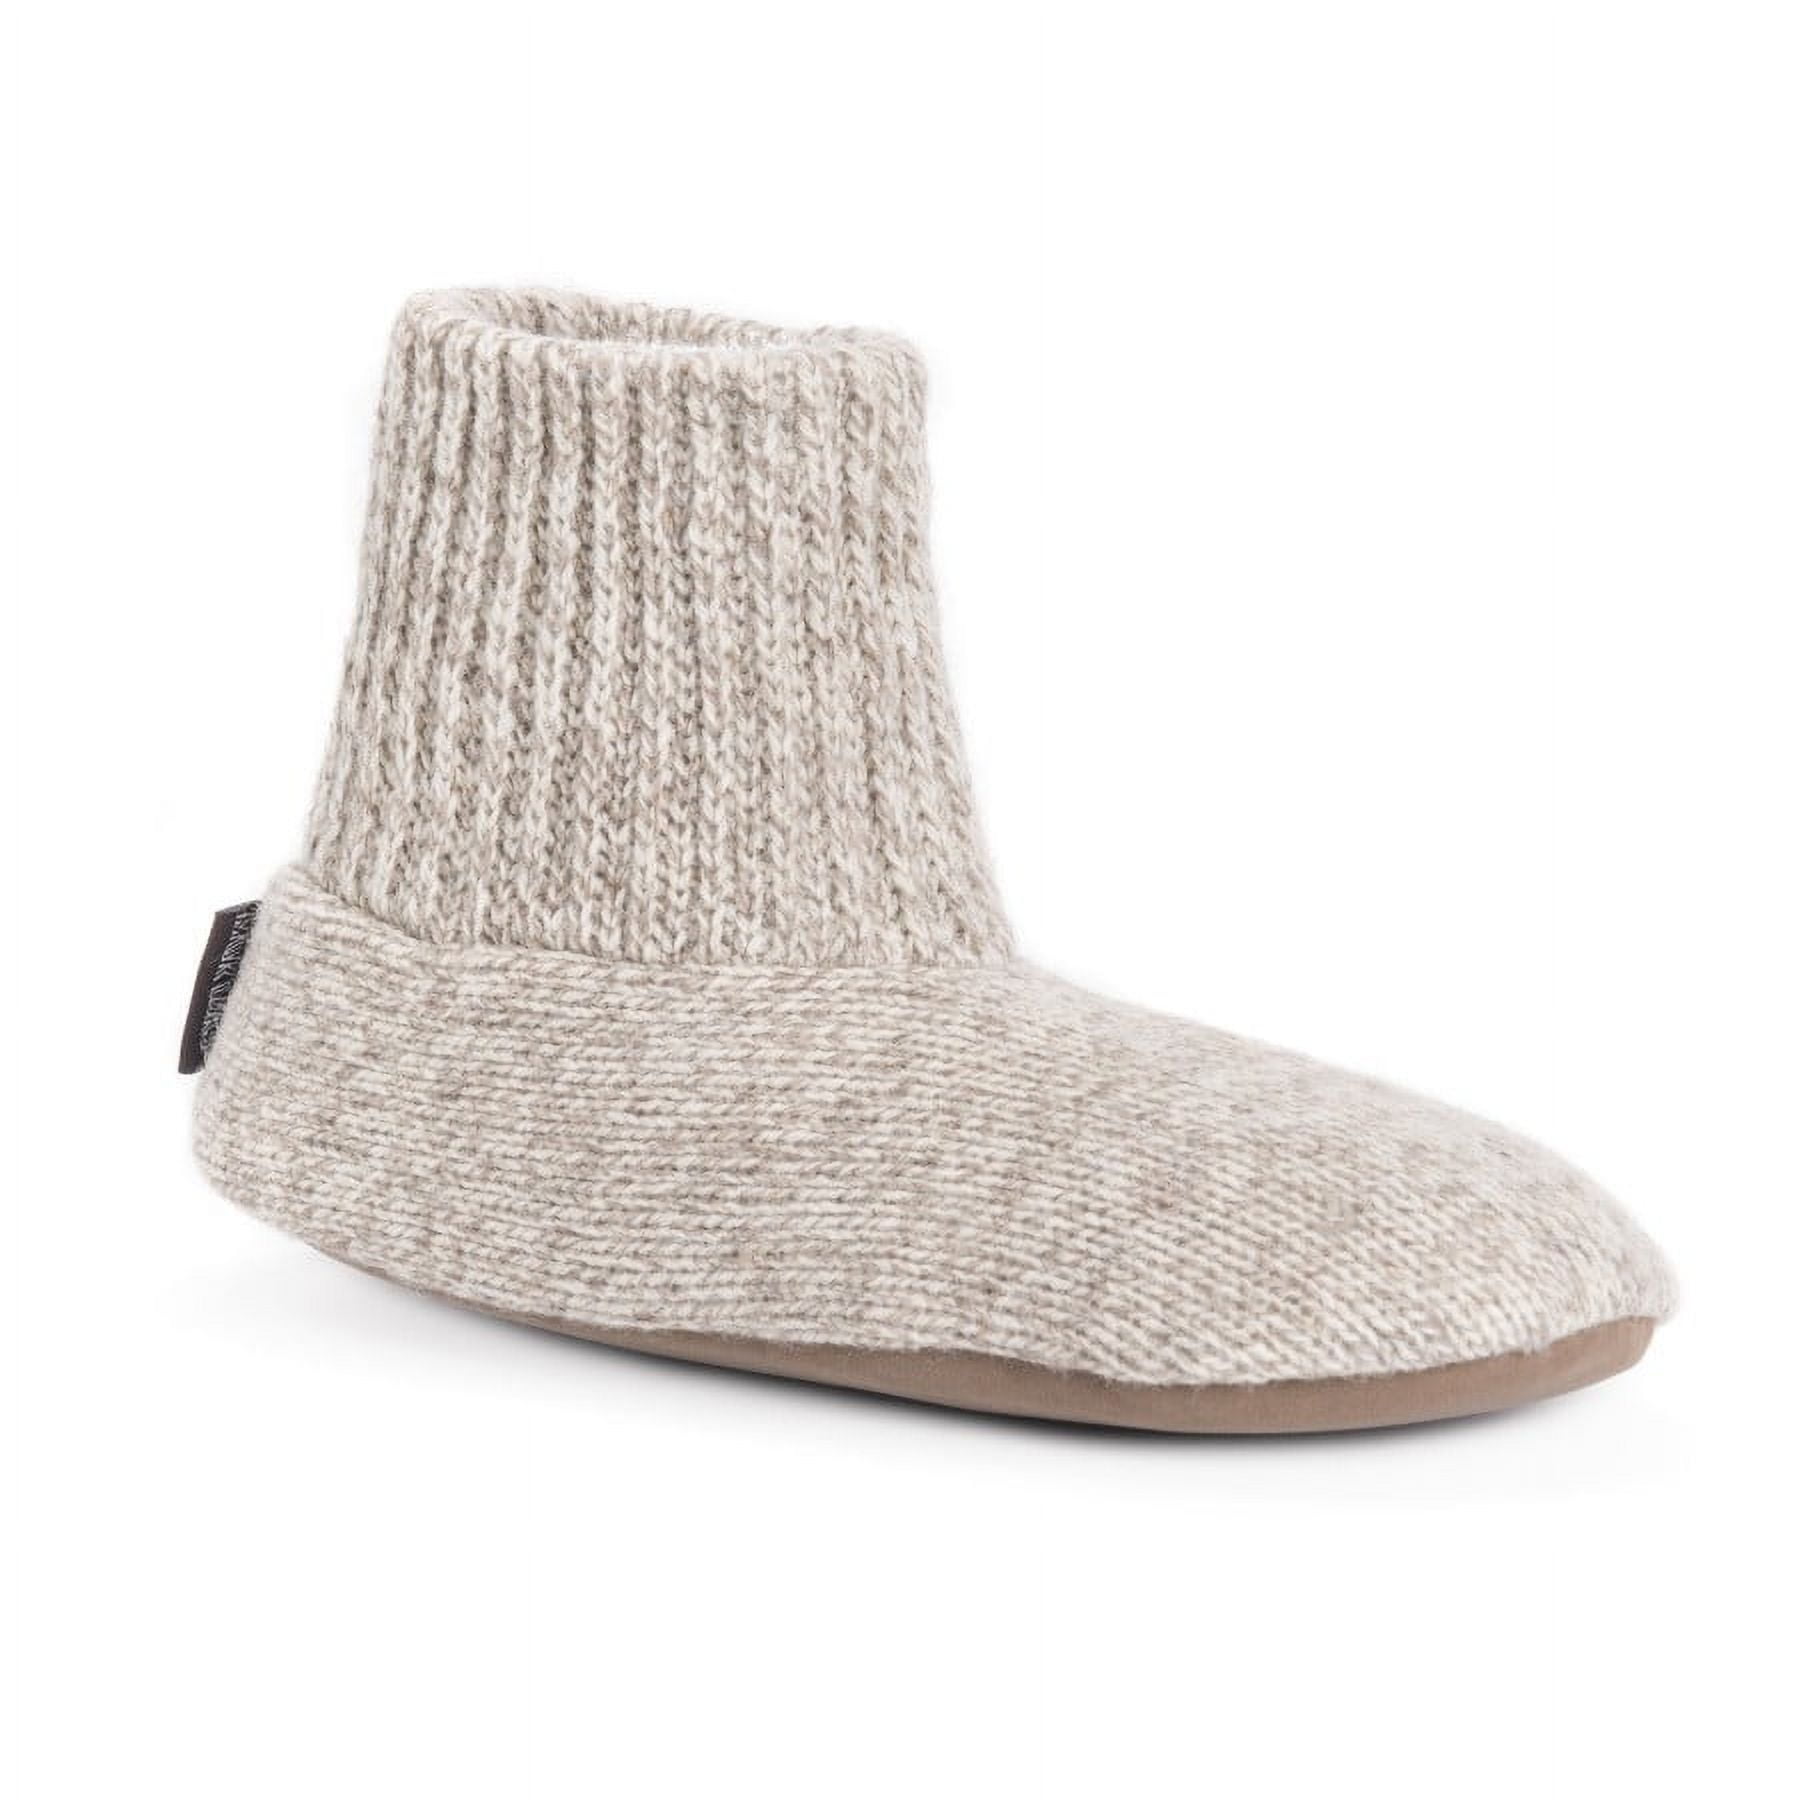 MUK LUKS Men's Morty Ragg Wool Slipper Sock-Natural S (7-8) - Walmart.com